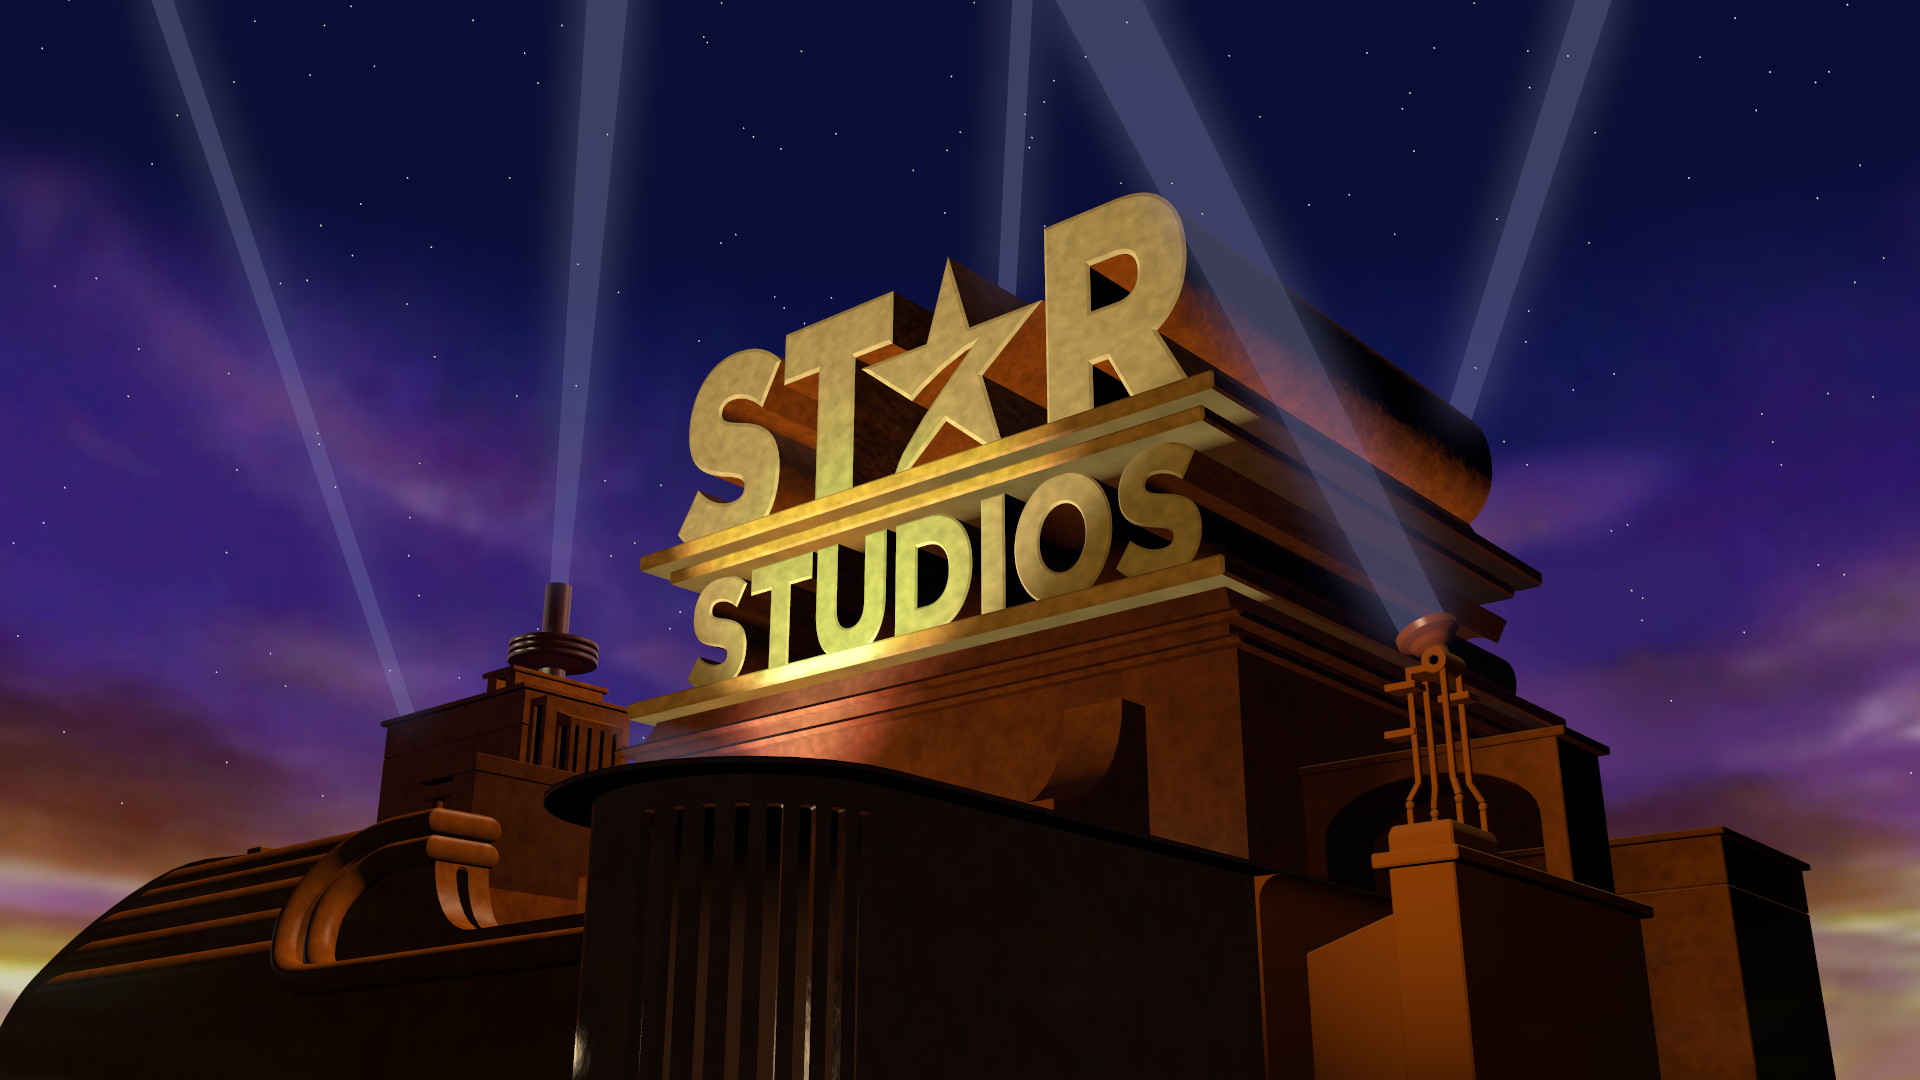 Star Studios 